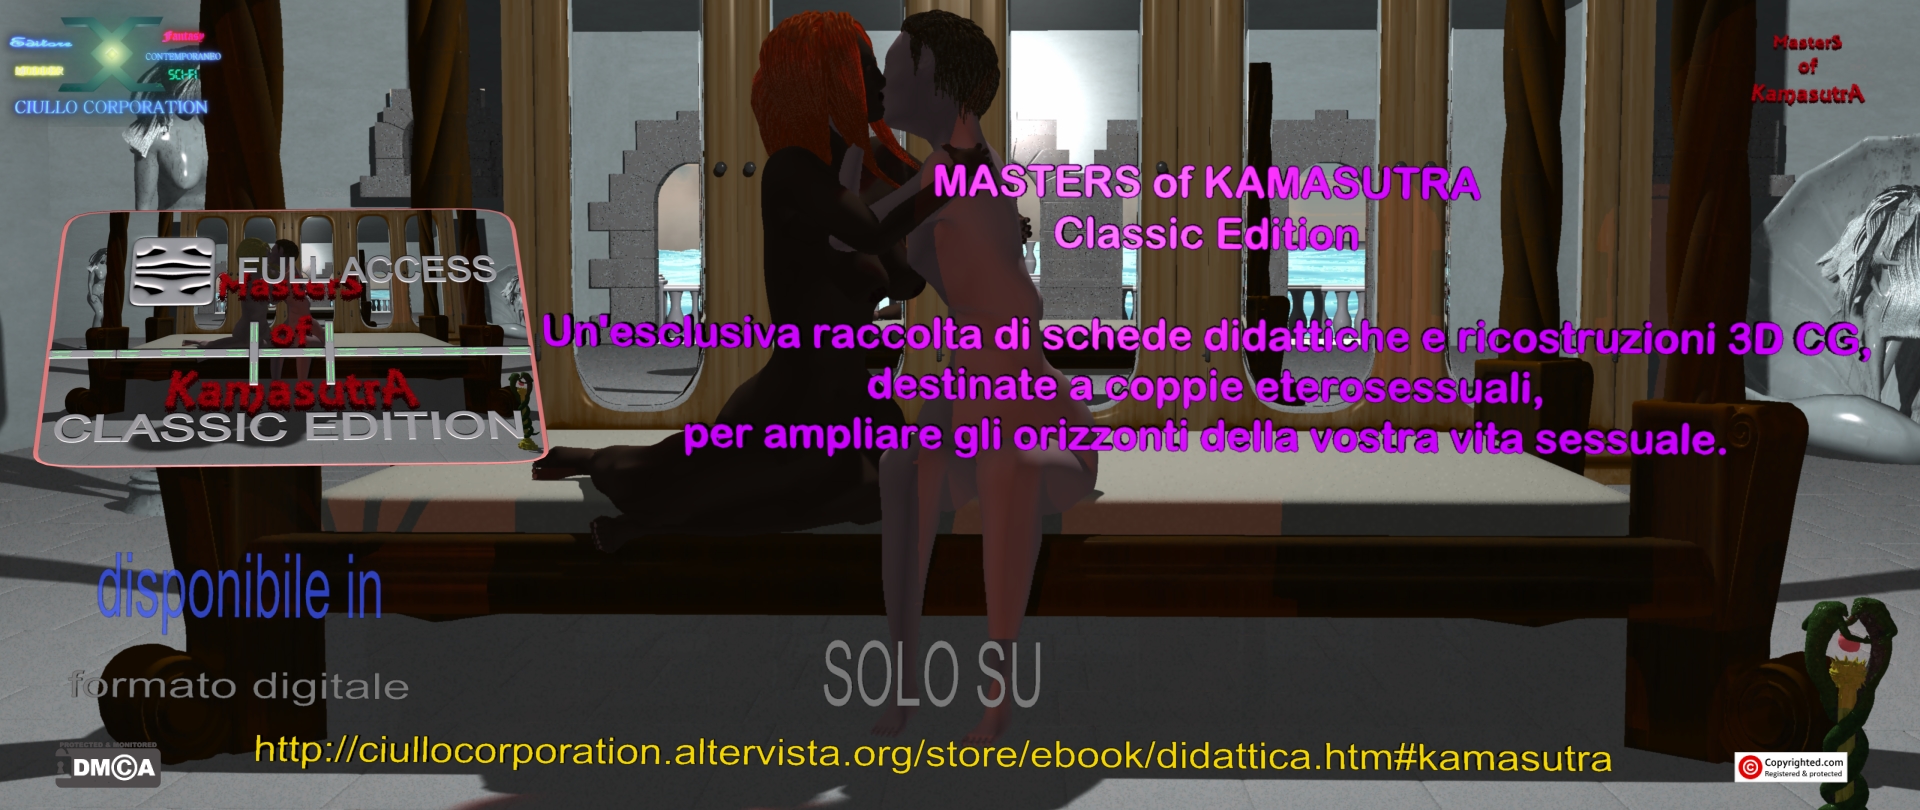 {VM18} MasterS of KamasutrA (CLASSIC Edition) [Tutti i Compendi]